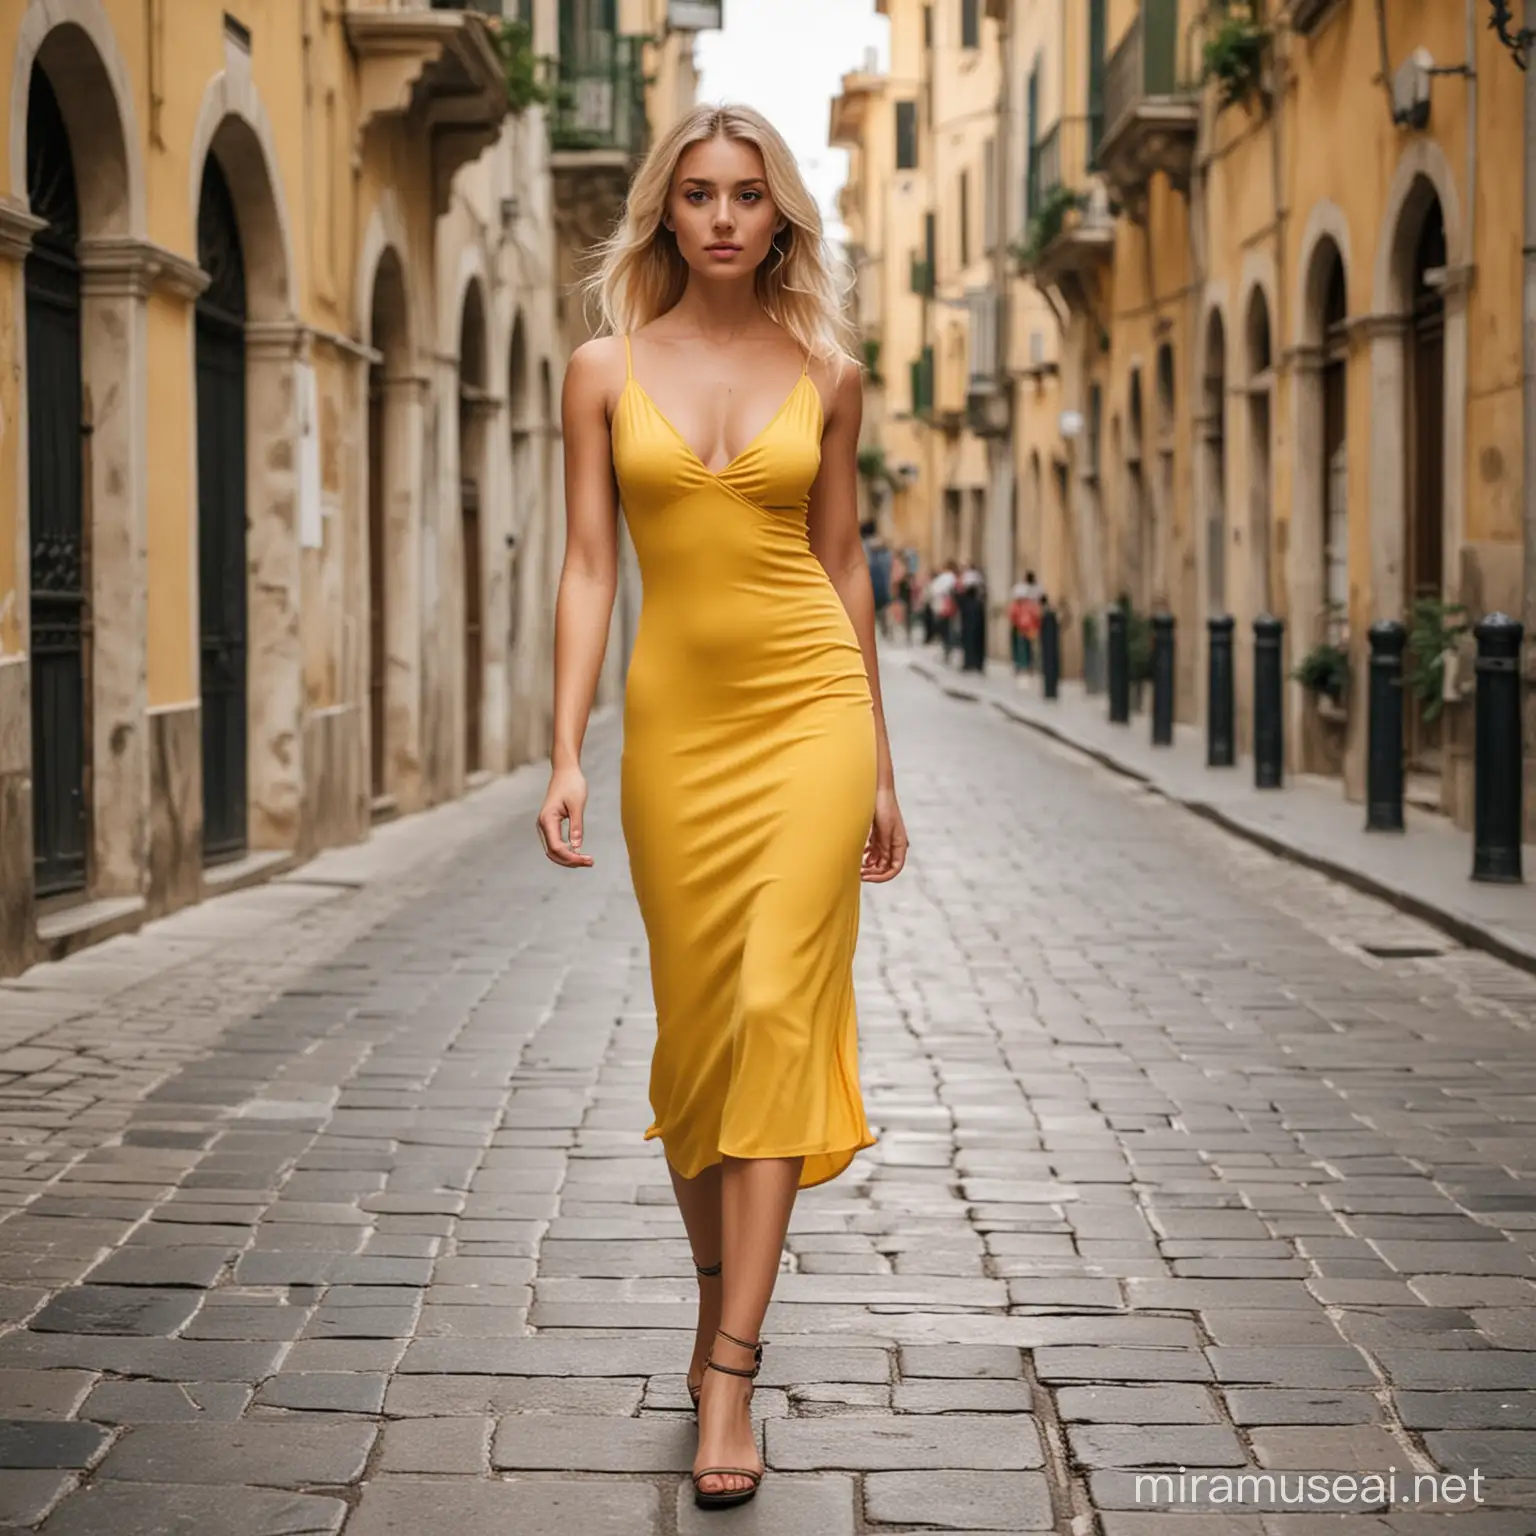 Elegant Blonde Girl in Yellow Dress Strolling through Italian City Streets